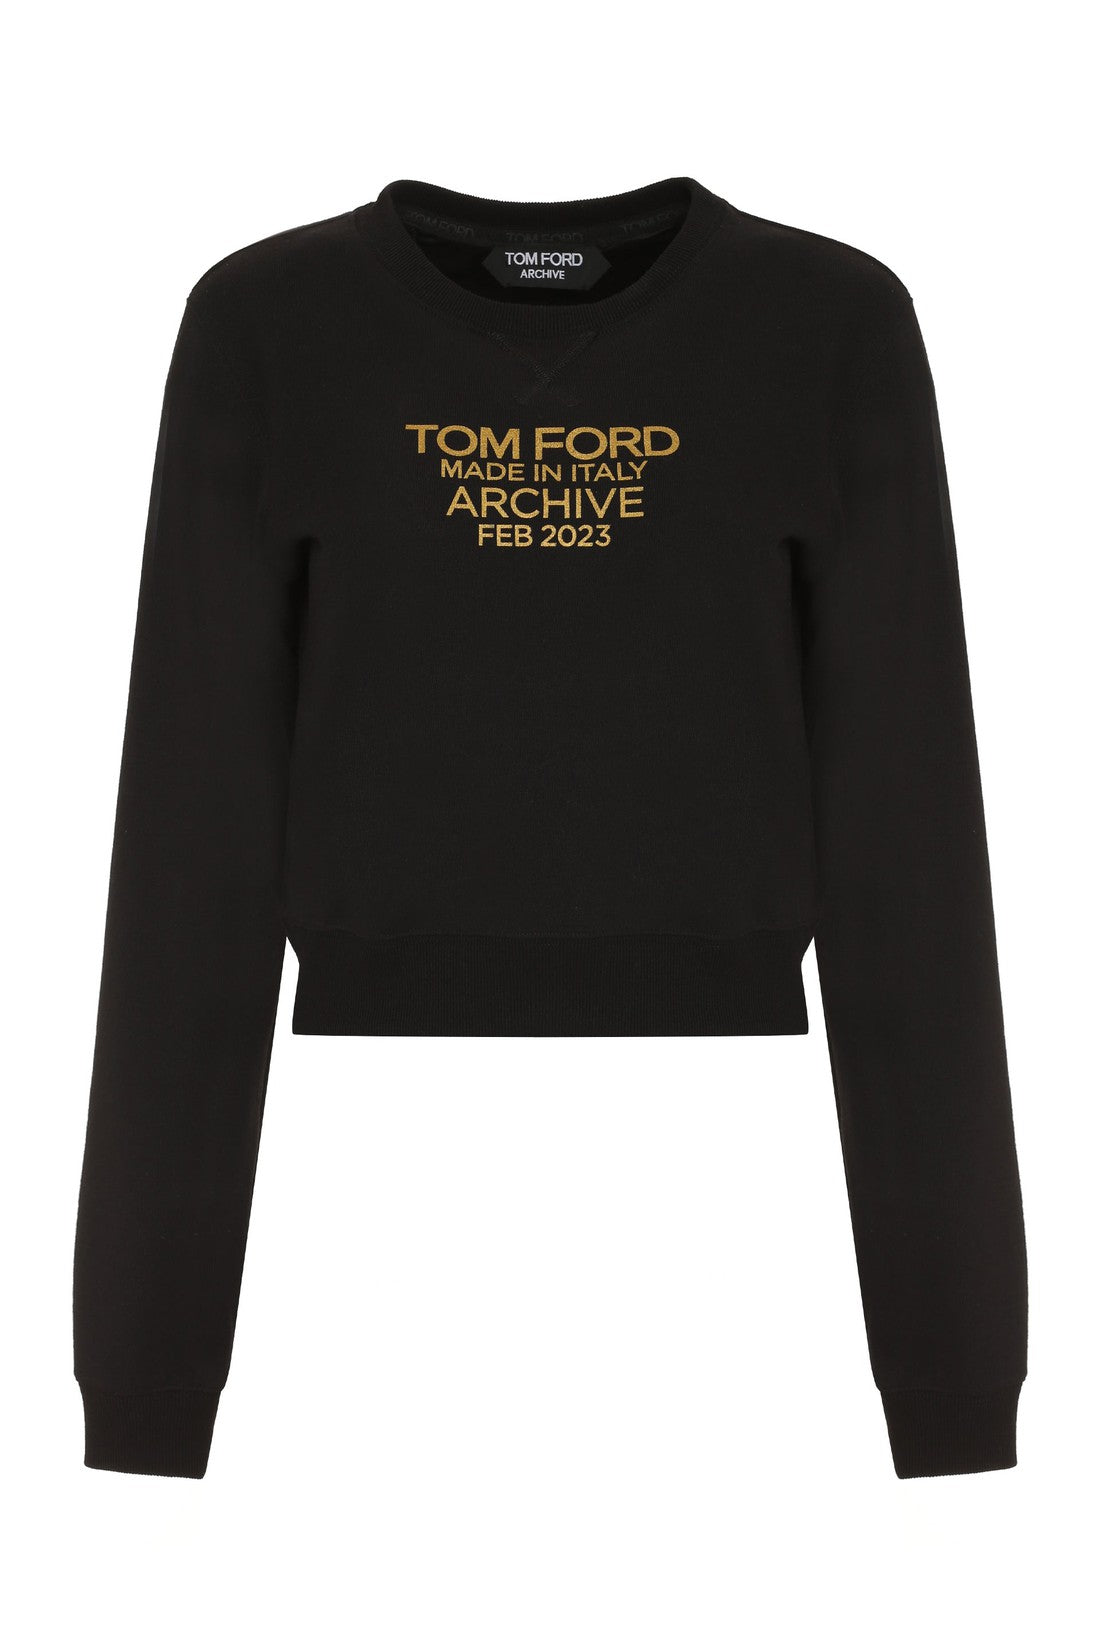 Tom Ford-OUTLET-SALE-Cotton crew-neck sweatshirt-ARCHIVIST